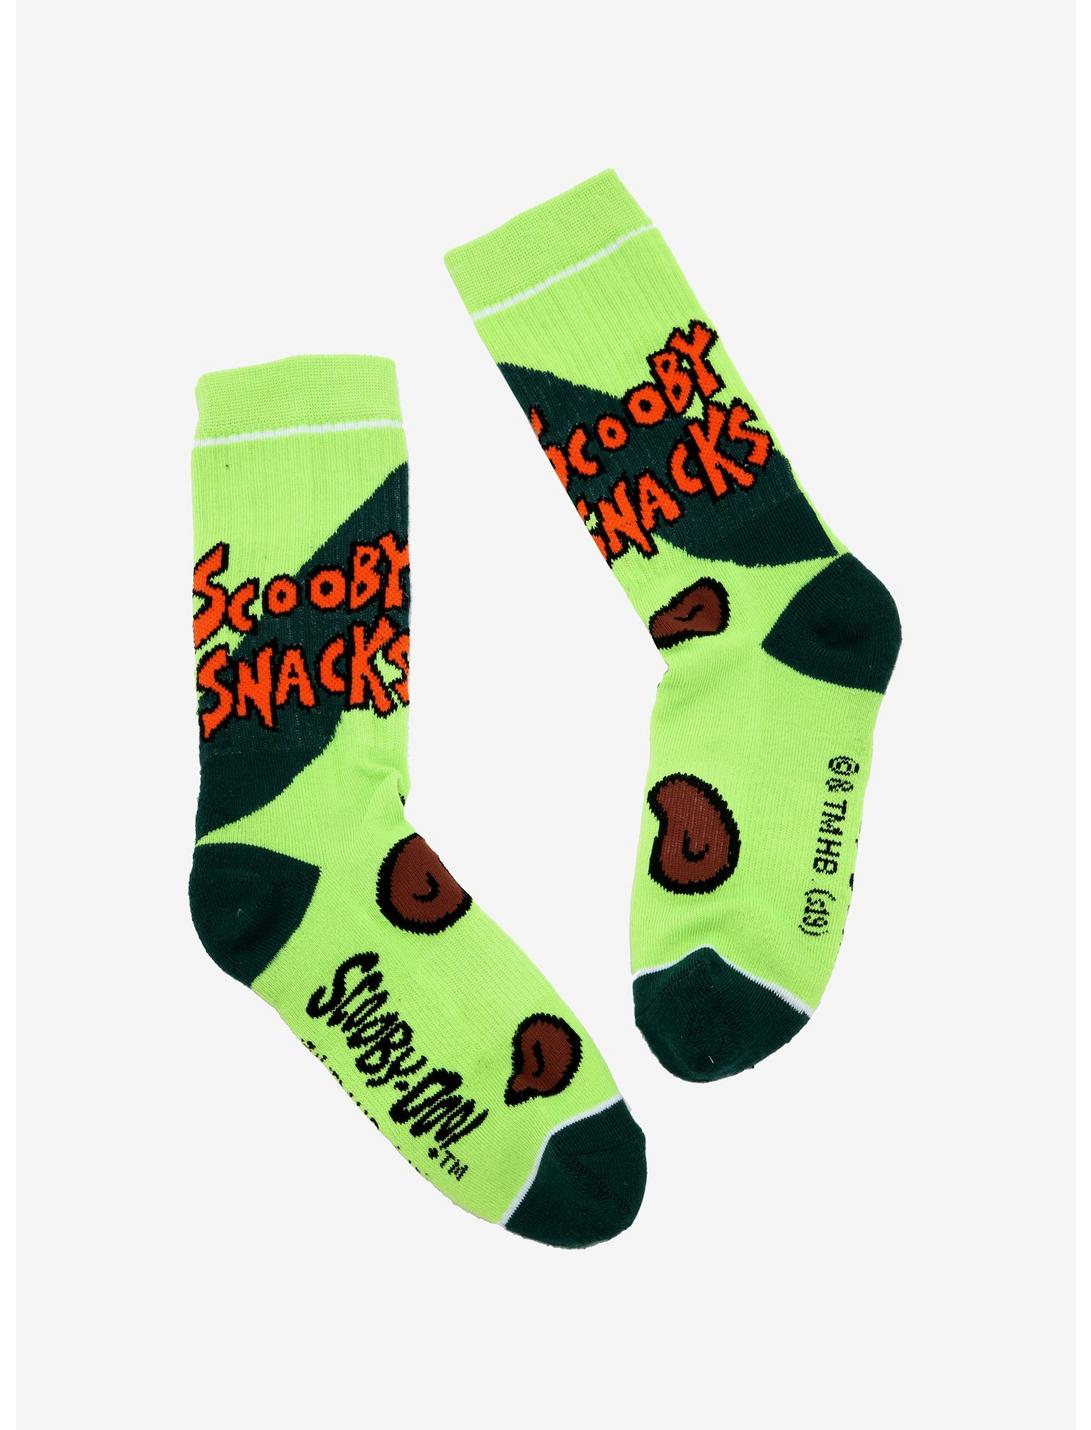 Scooby-Doo Scooby Snacks Crew Socks - BoxLunch Exclusive, , hi-res